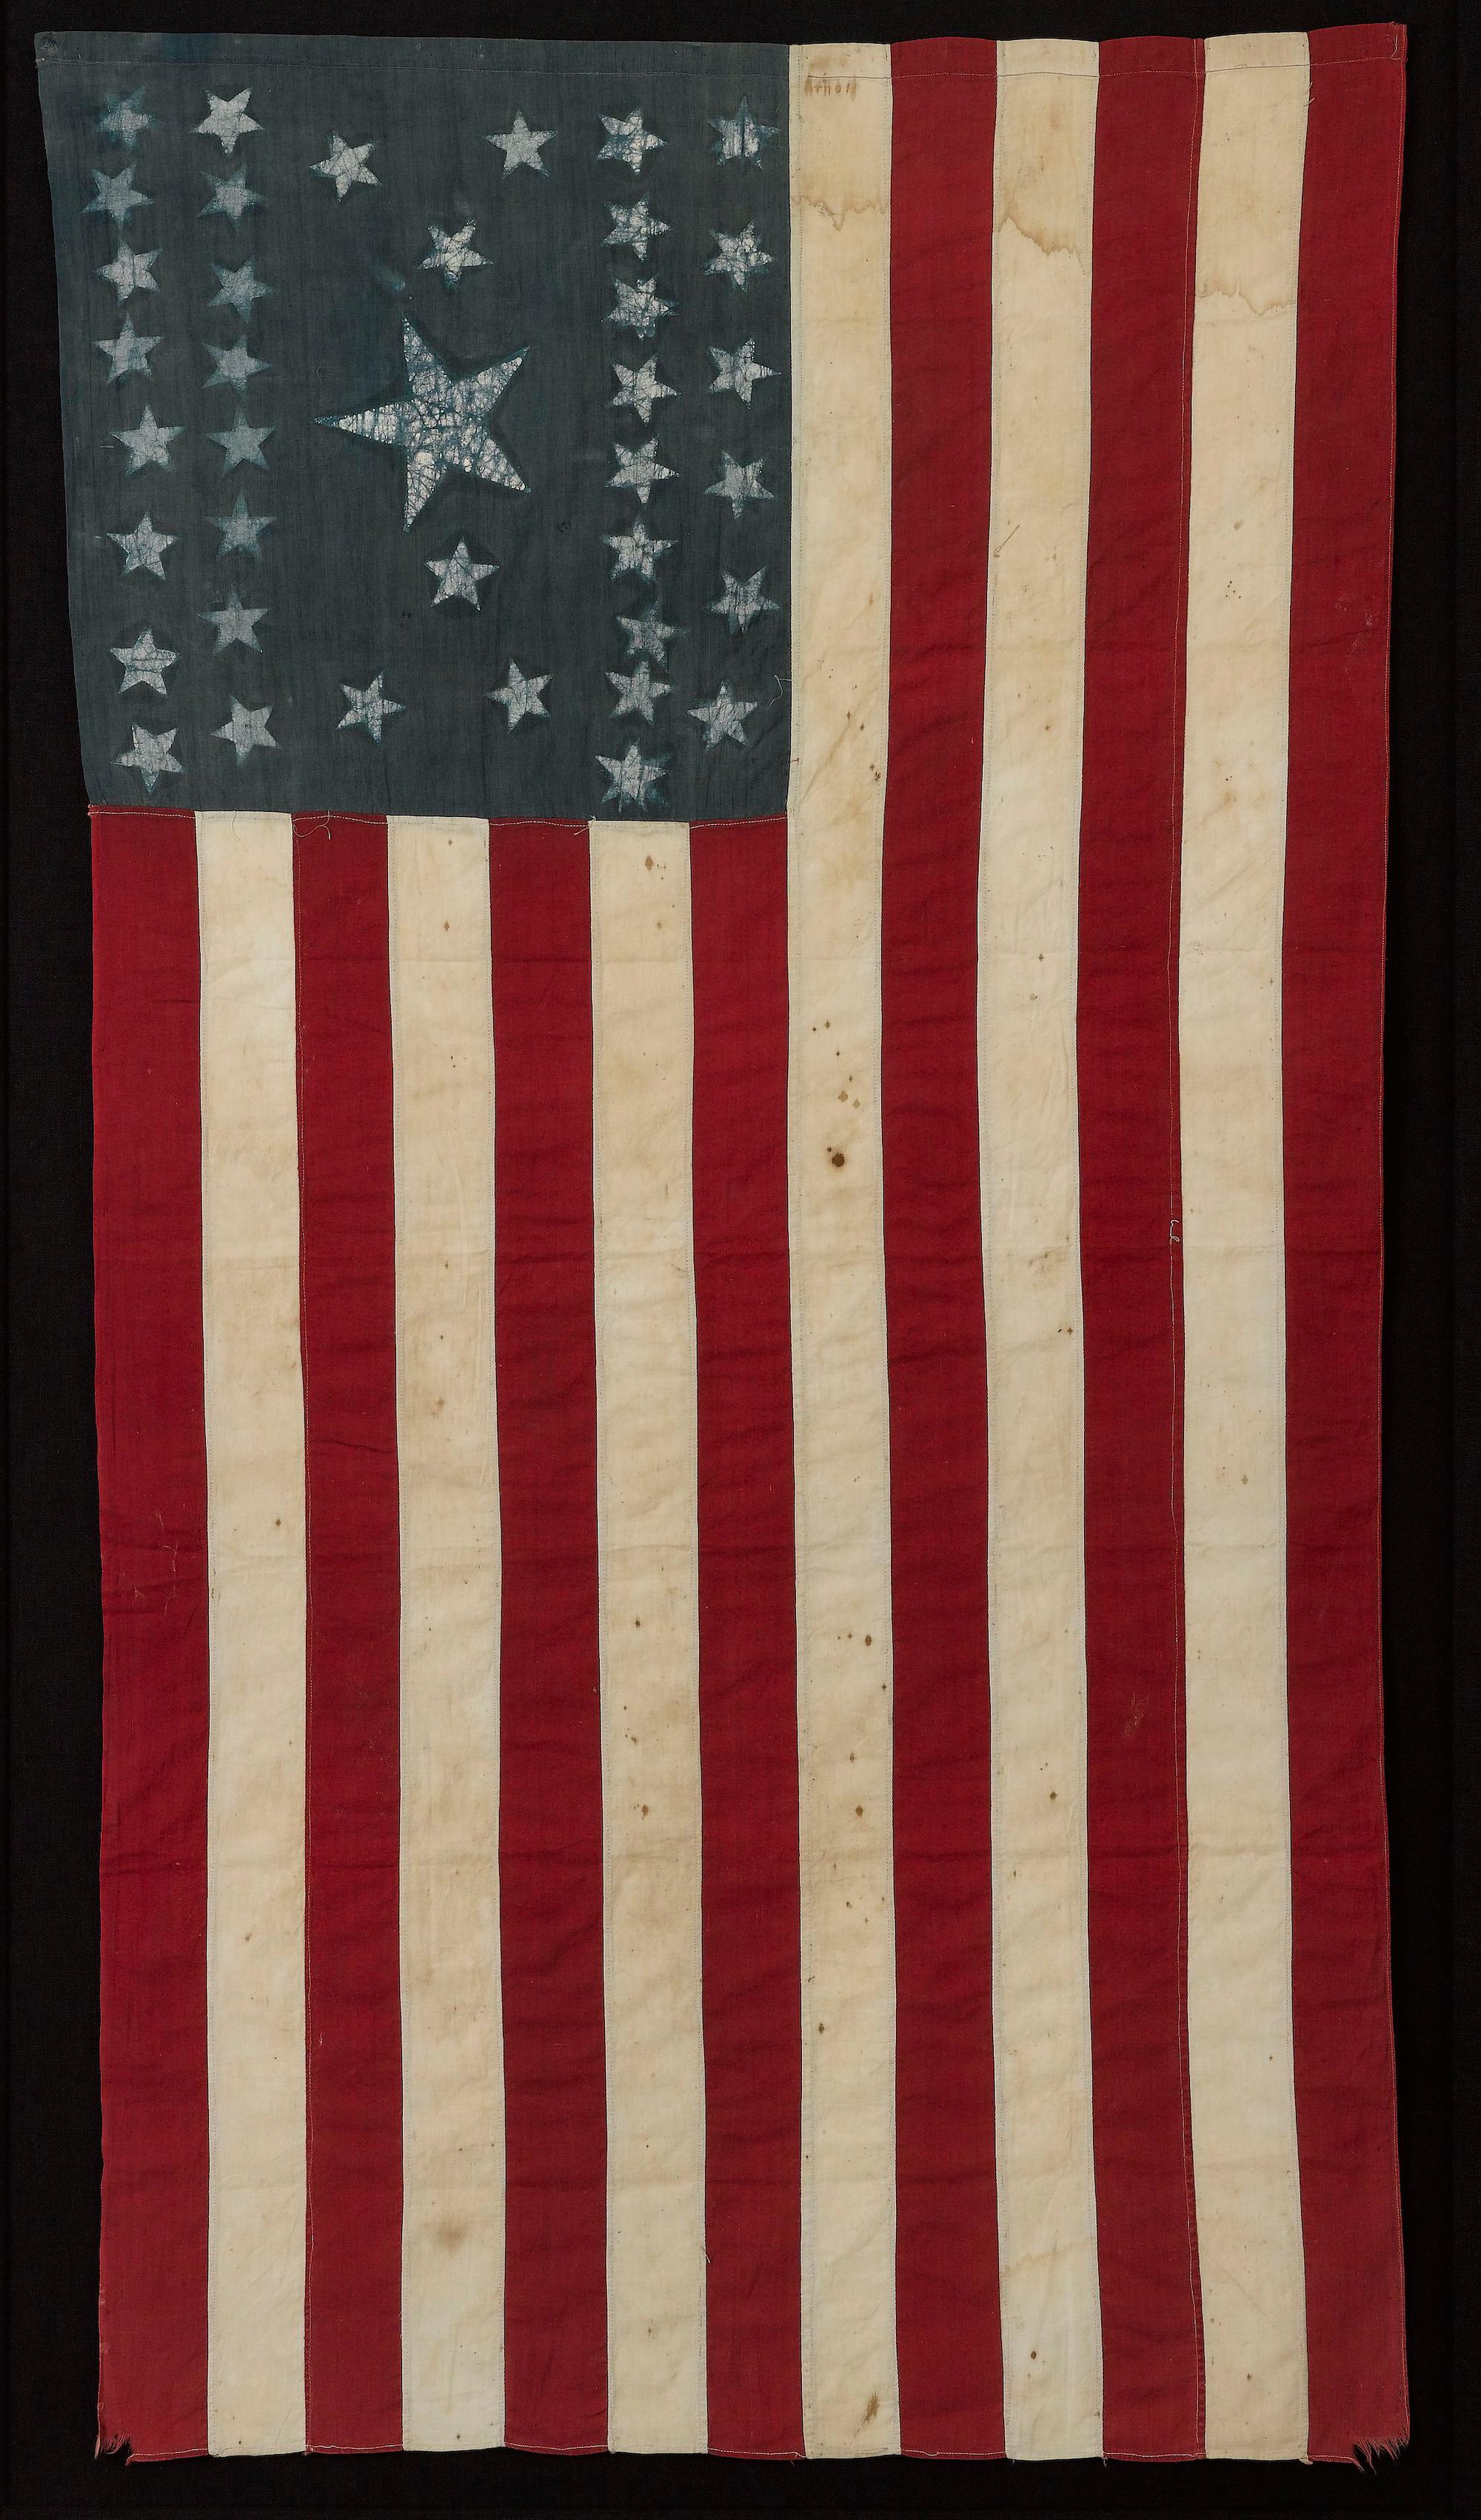 Late 19th Century 38-Star Vertical American Flag, Celebrating Colorado Statehood, Circa 1876